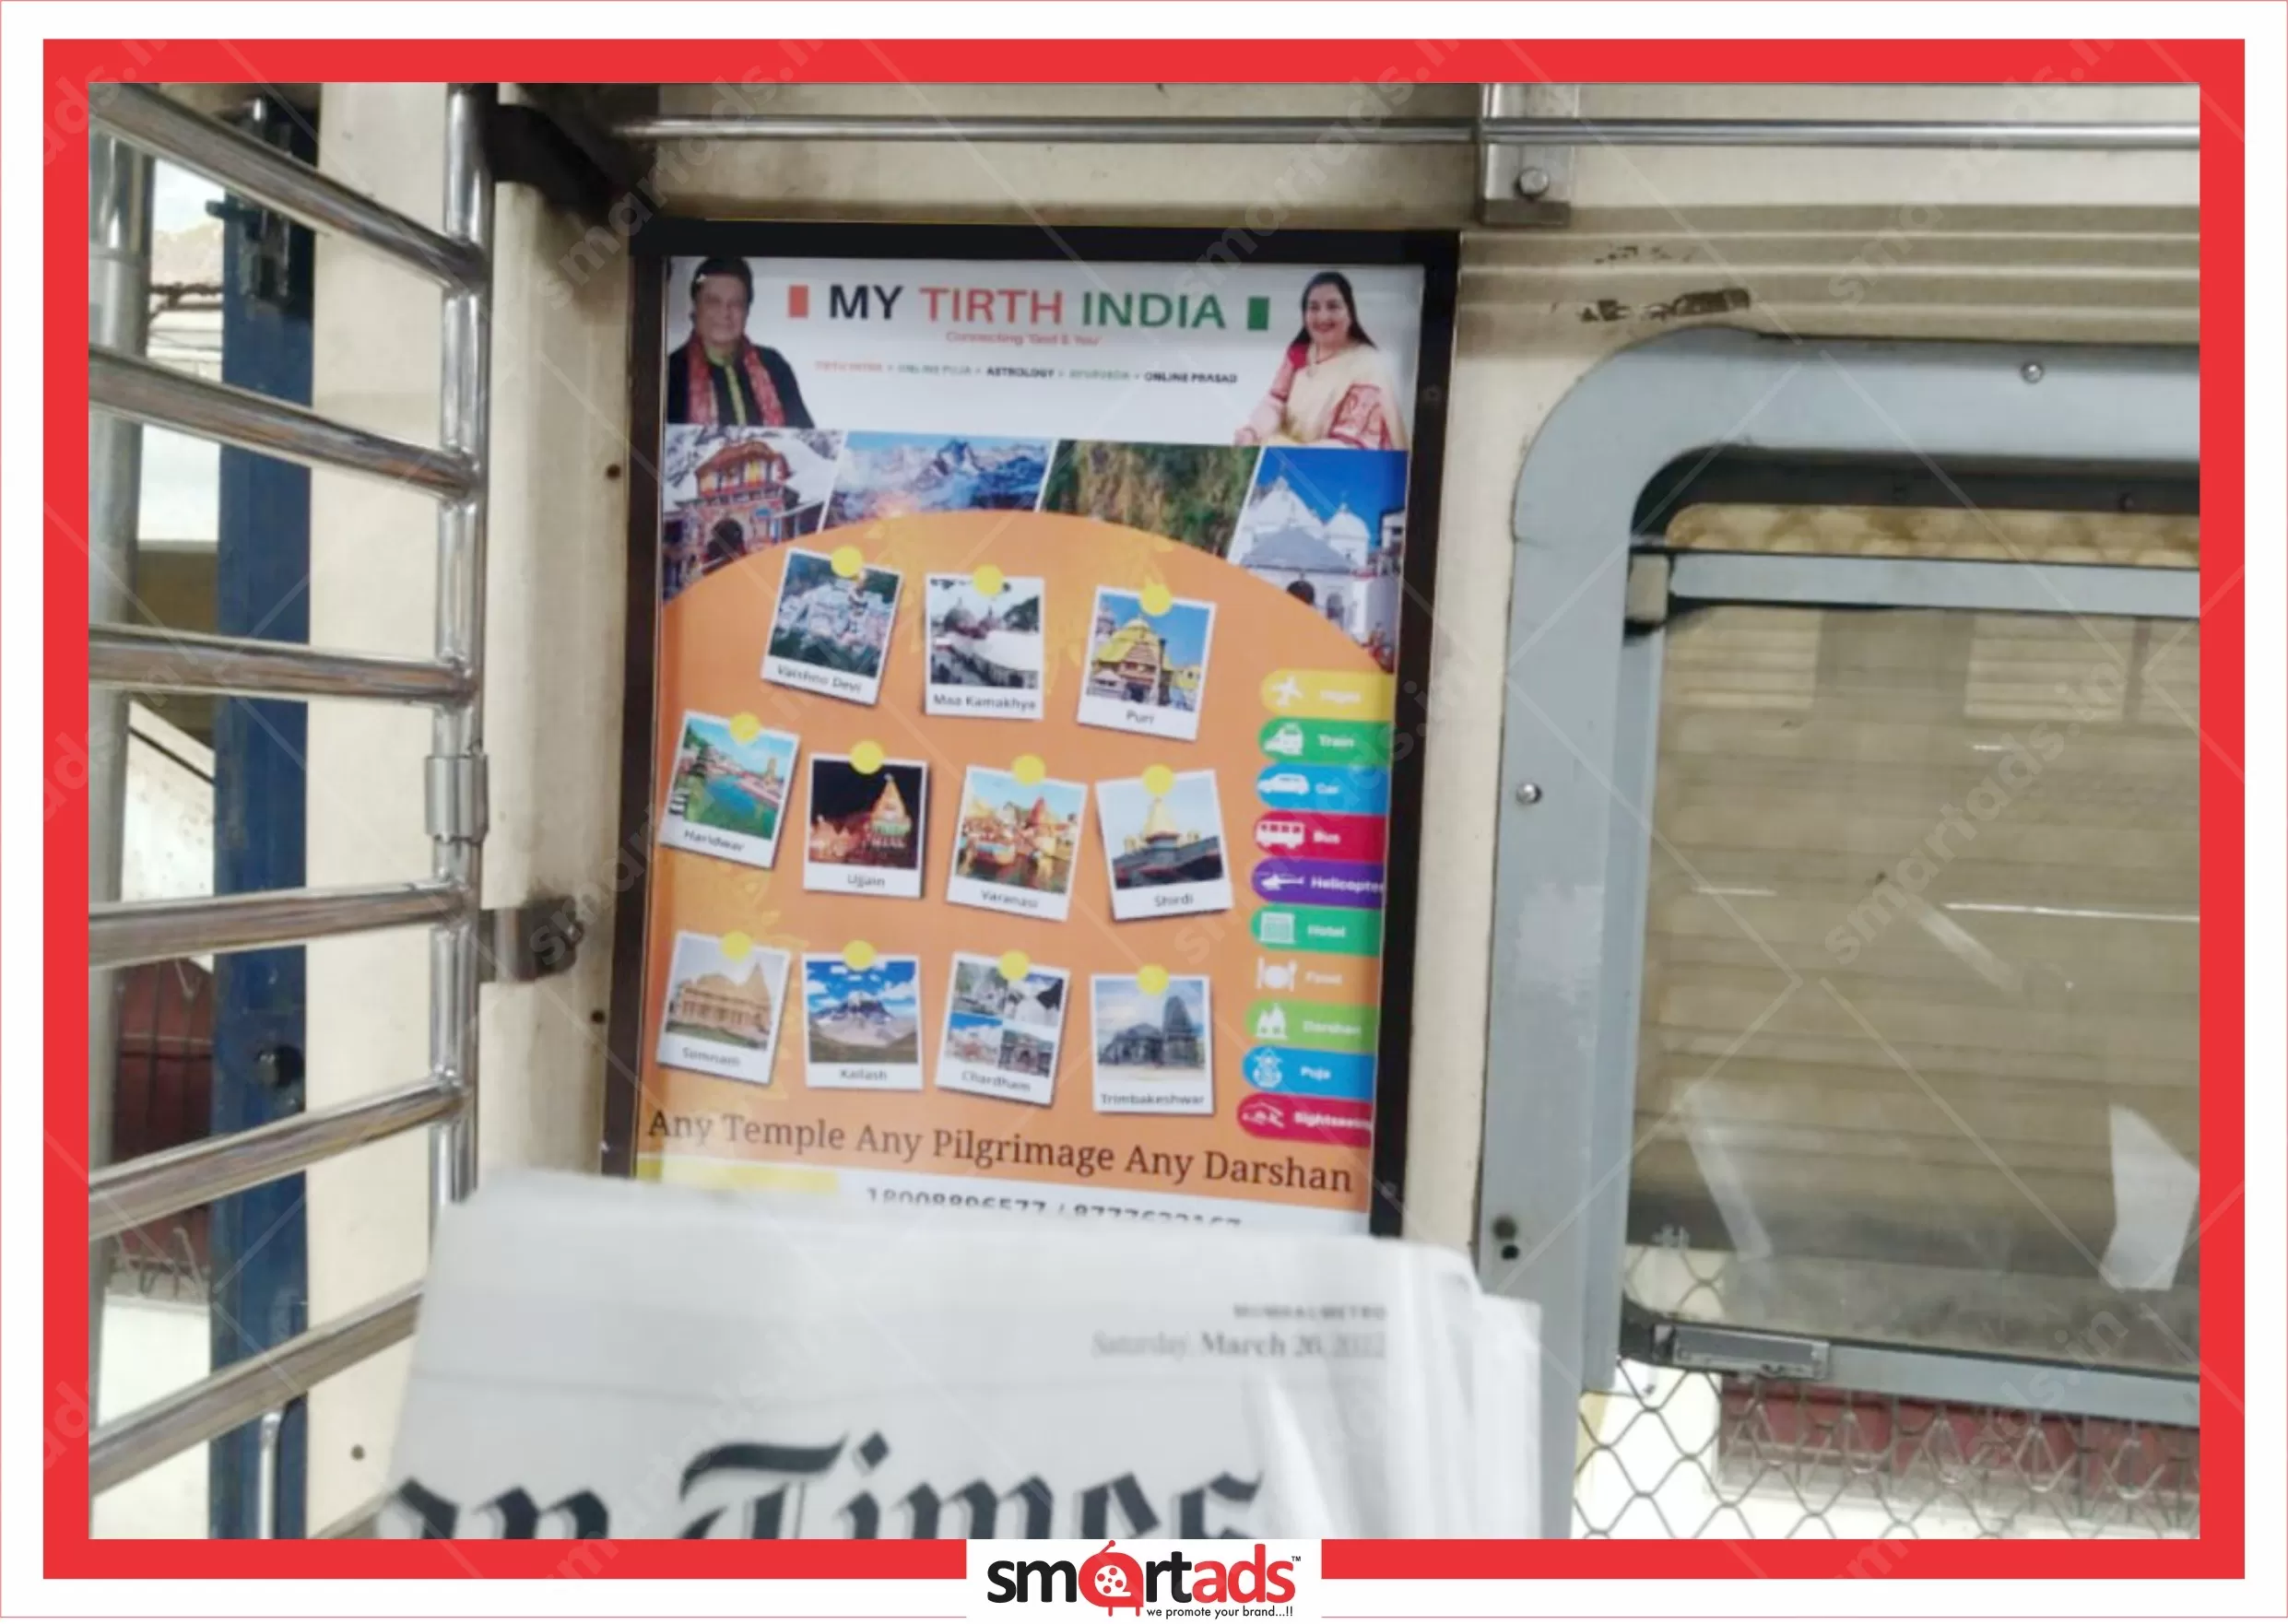 Tirth India Train Inside